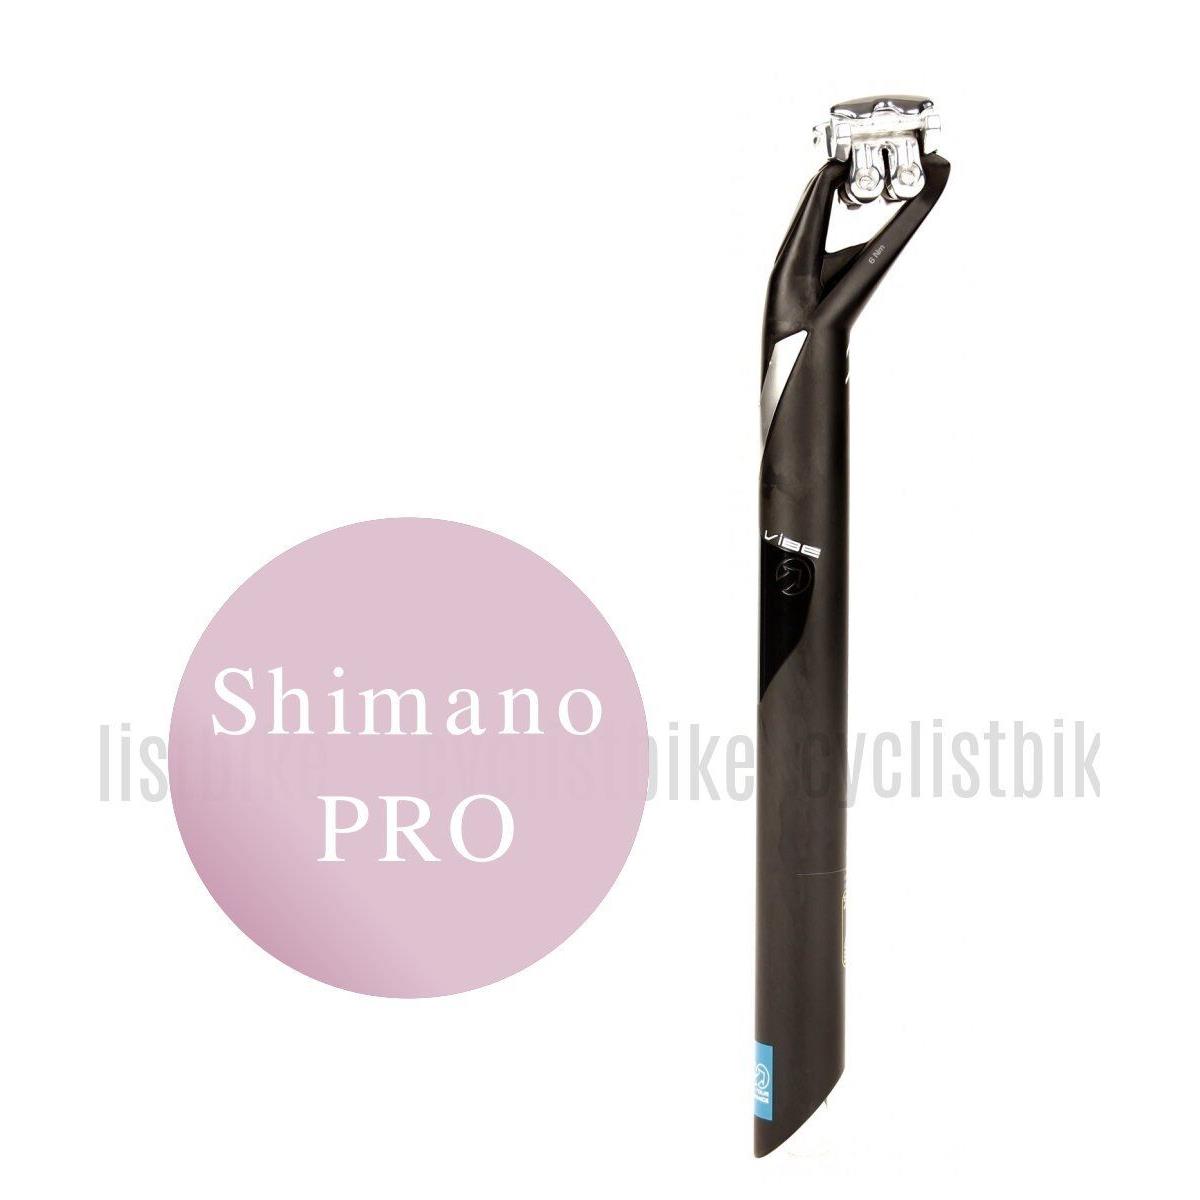 Shimano Pro Vibe 31.6x350mm Carbon Fiber Seatpost